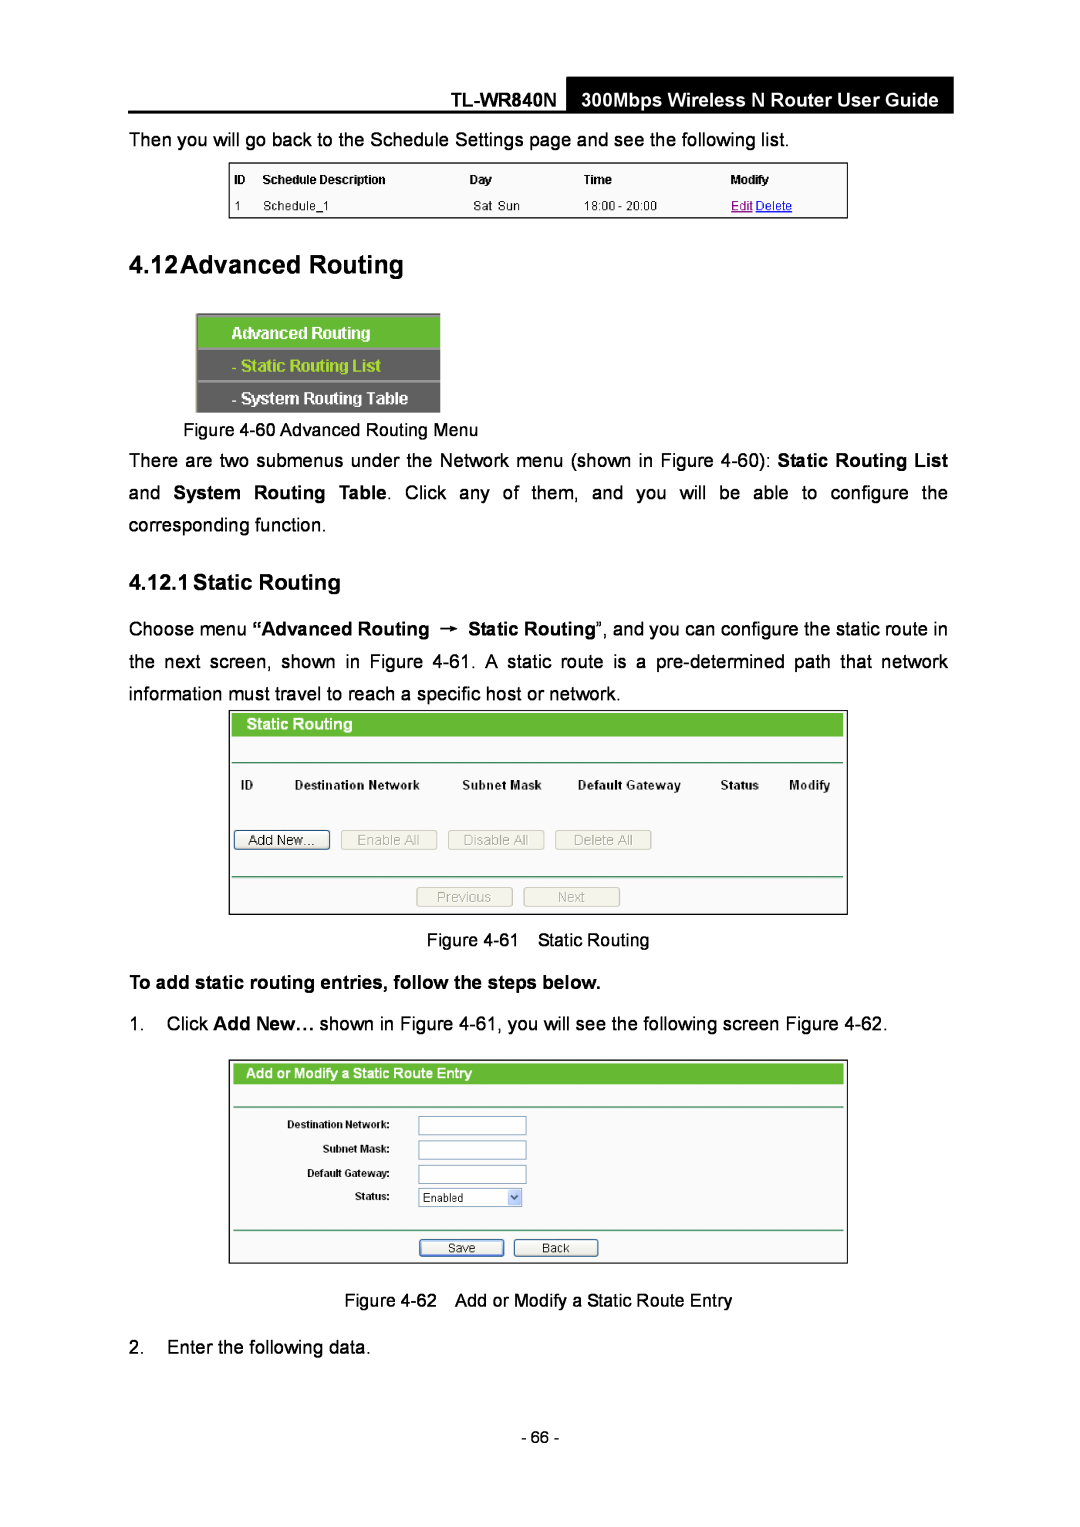 TP-Link TL-WR840N manual 4.12Advanced Routing, Static Routing, To add static routing entries, follow the steps below 